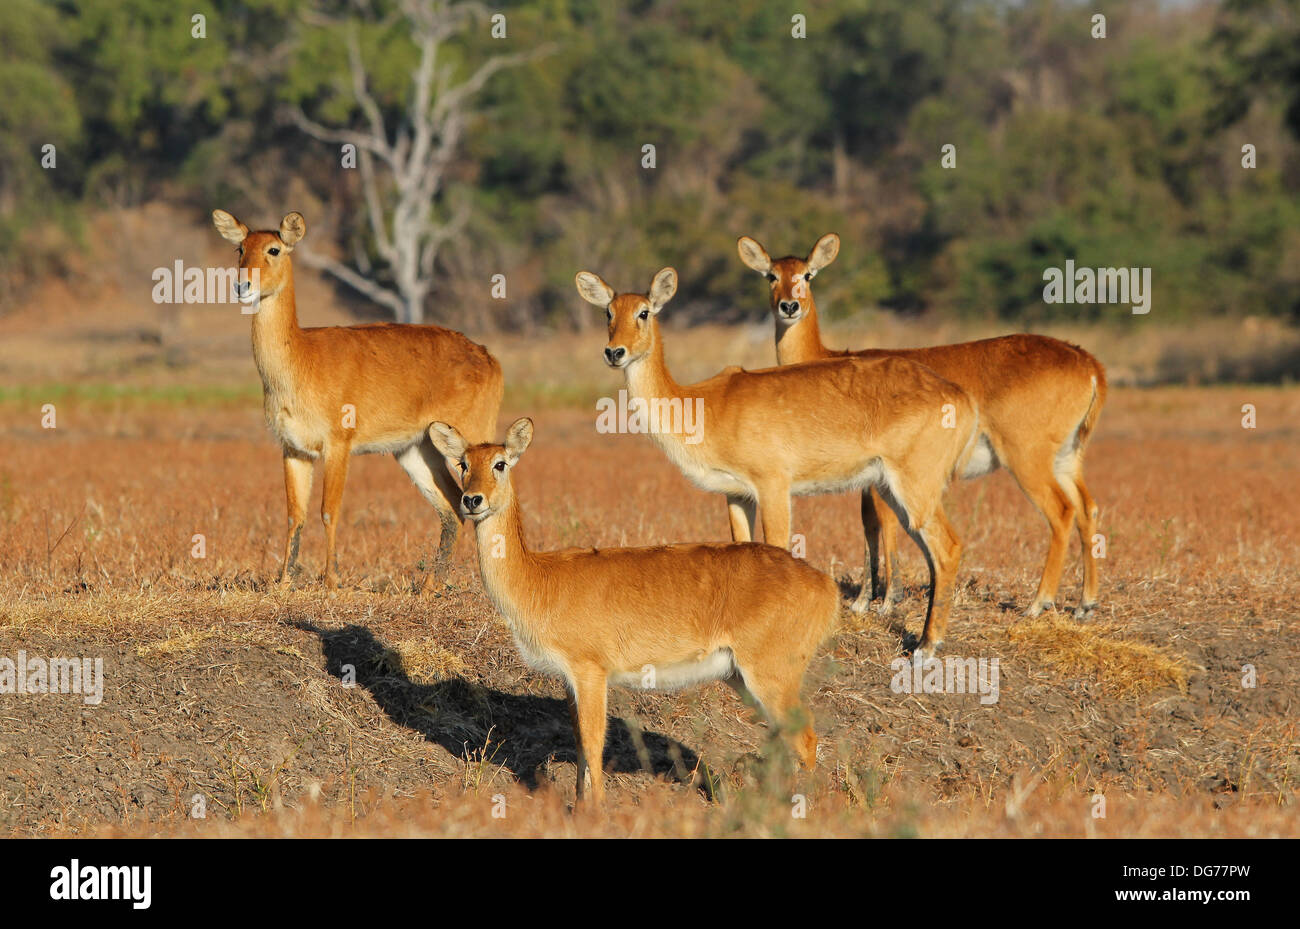 Puku Gazelle Sambia Stockfoto